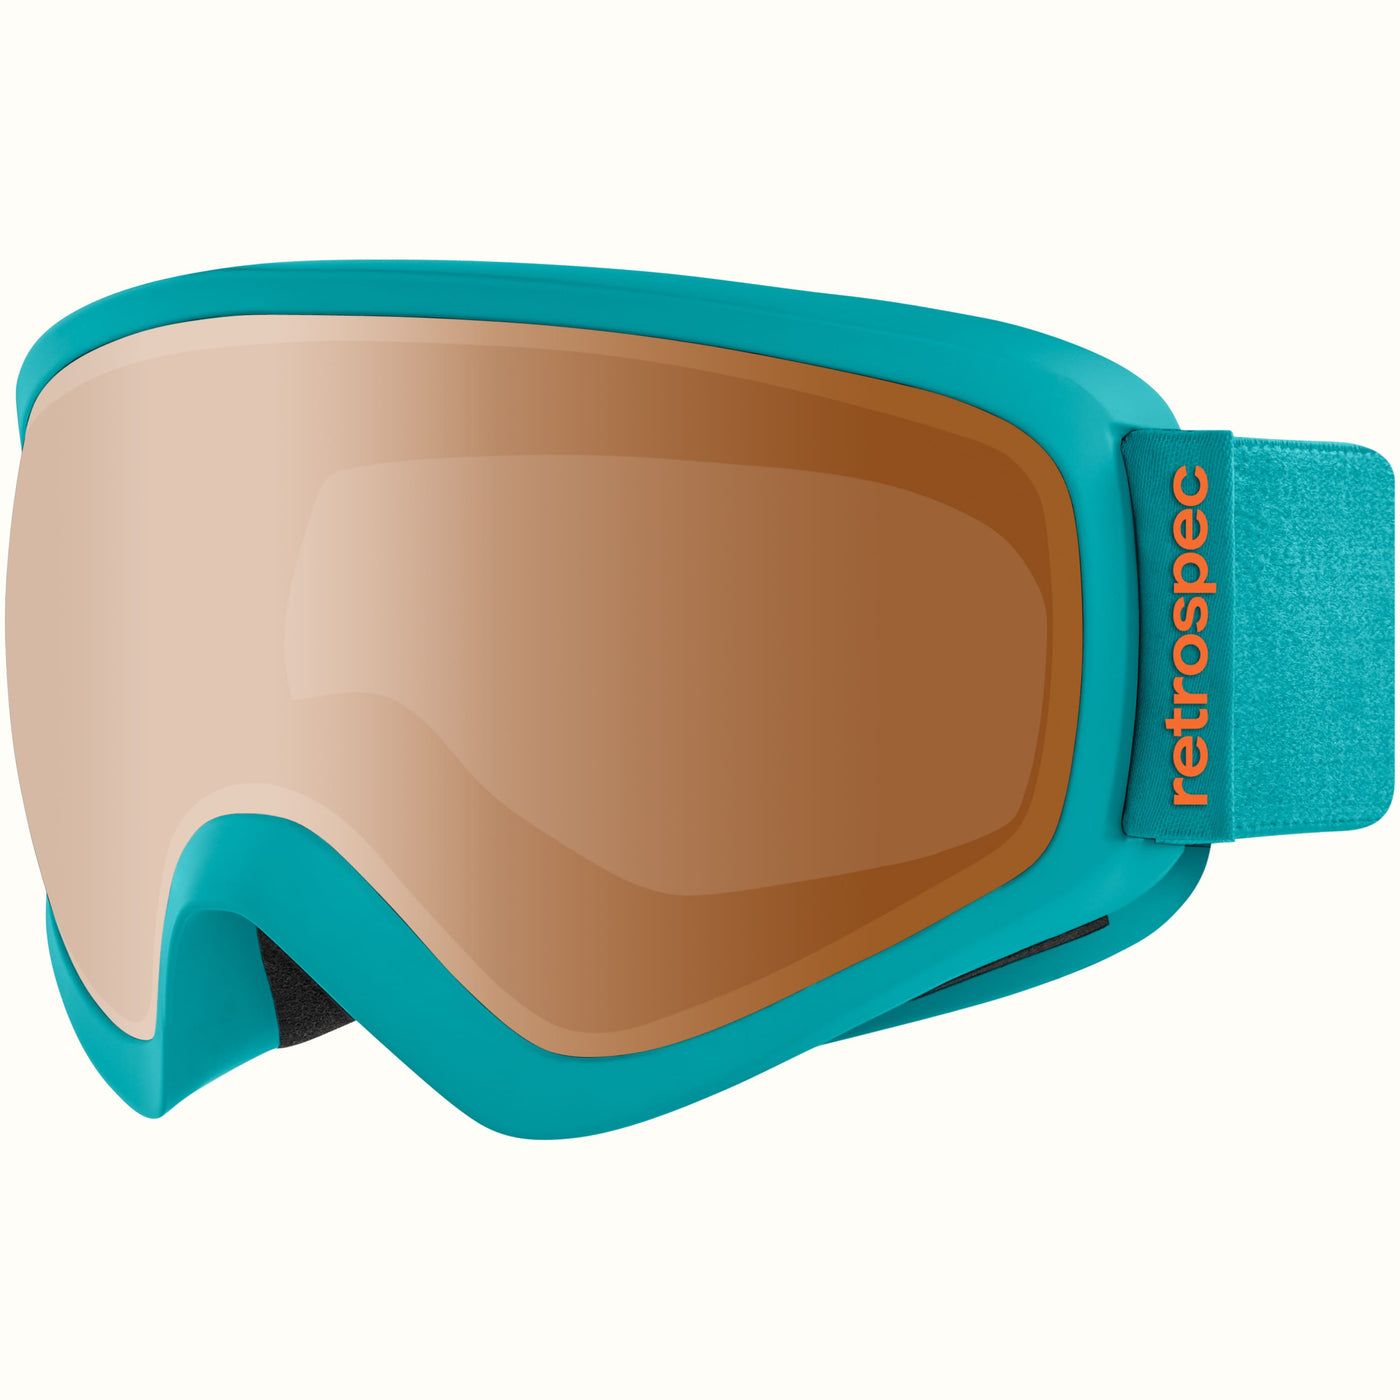 Dipper Kids' Ski & Snowboard Goggles | Matte Teal and Citrine